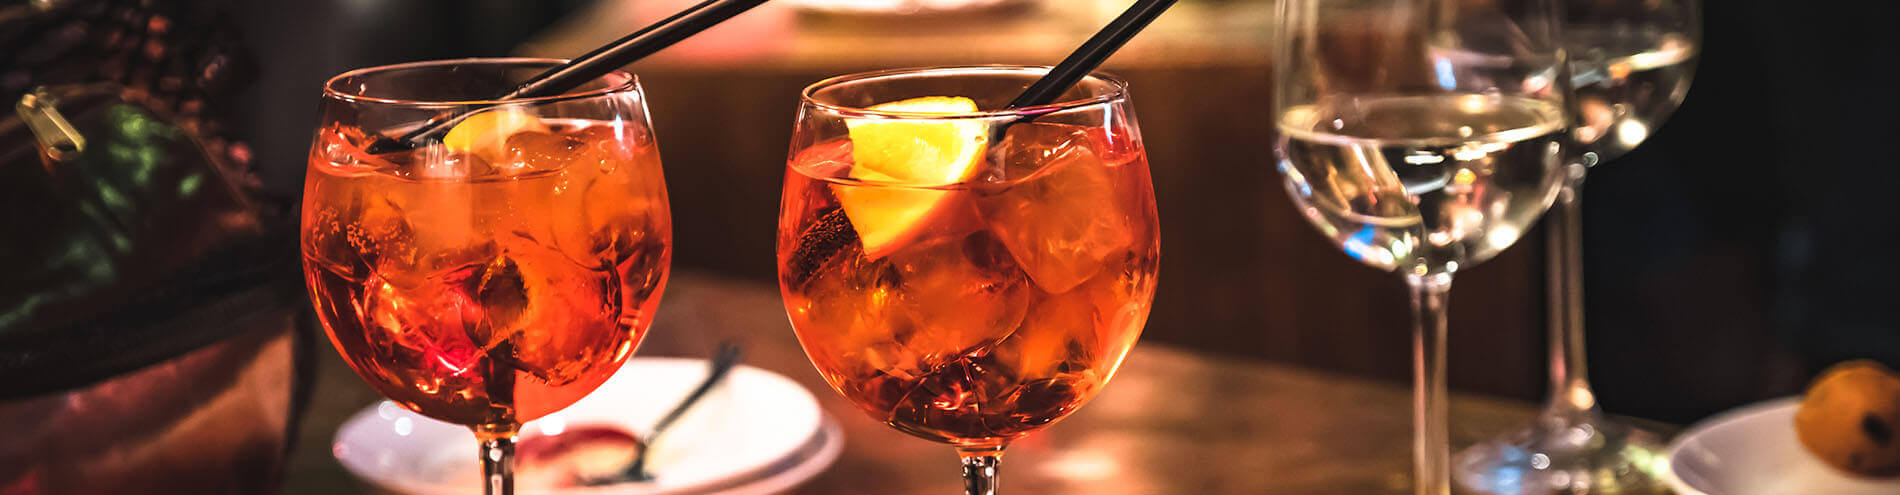 Cocktail facile d'été : Aperol Spritz - Enoteca Divino